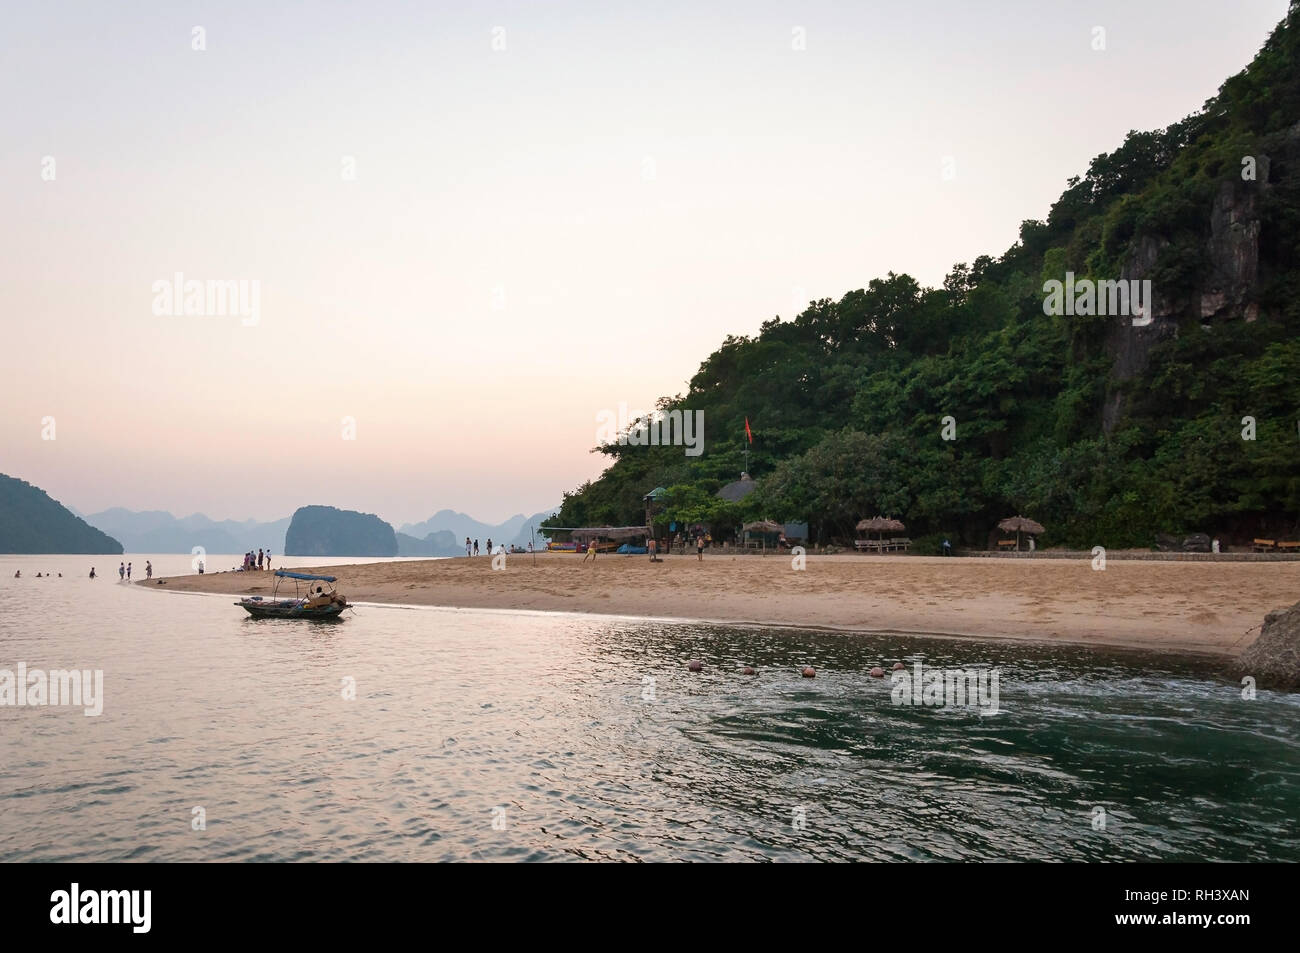 Ti Top beach or Bai bien Ti Top with tourists on the beach at sunset, Halong or Ha Long Bay, Vietnam Stock Photo